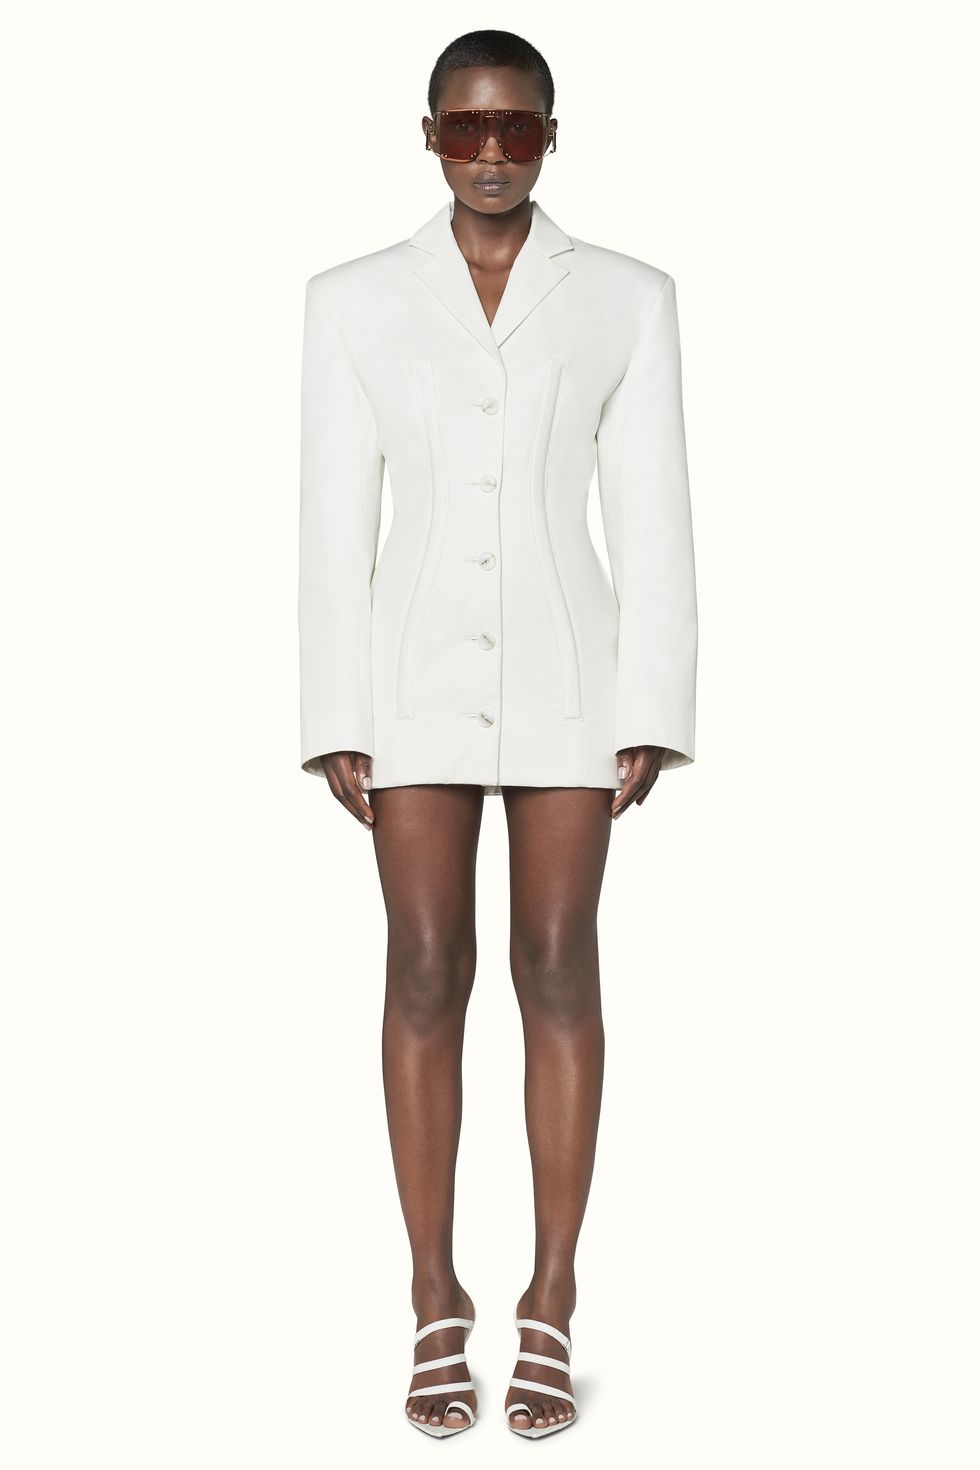 First Look at Rihanna's New LVMH Fenty Fashion Brand